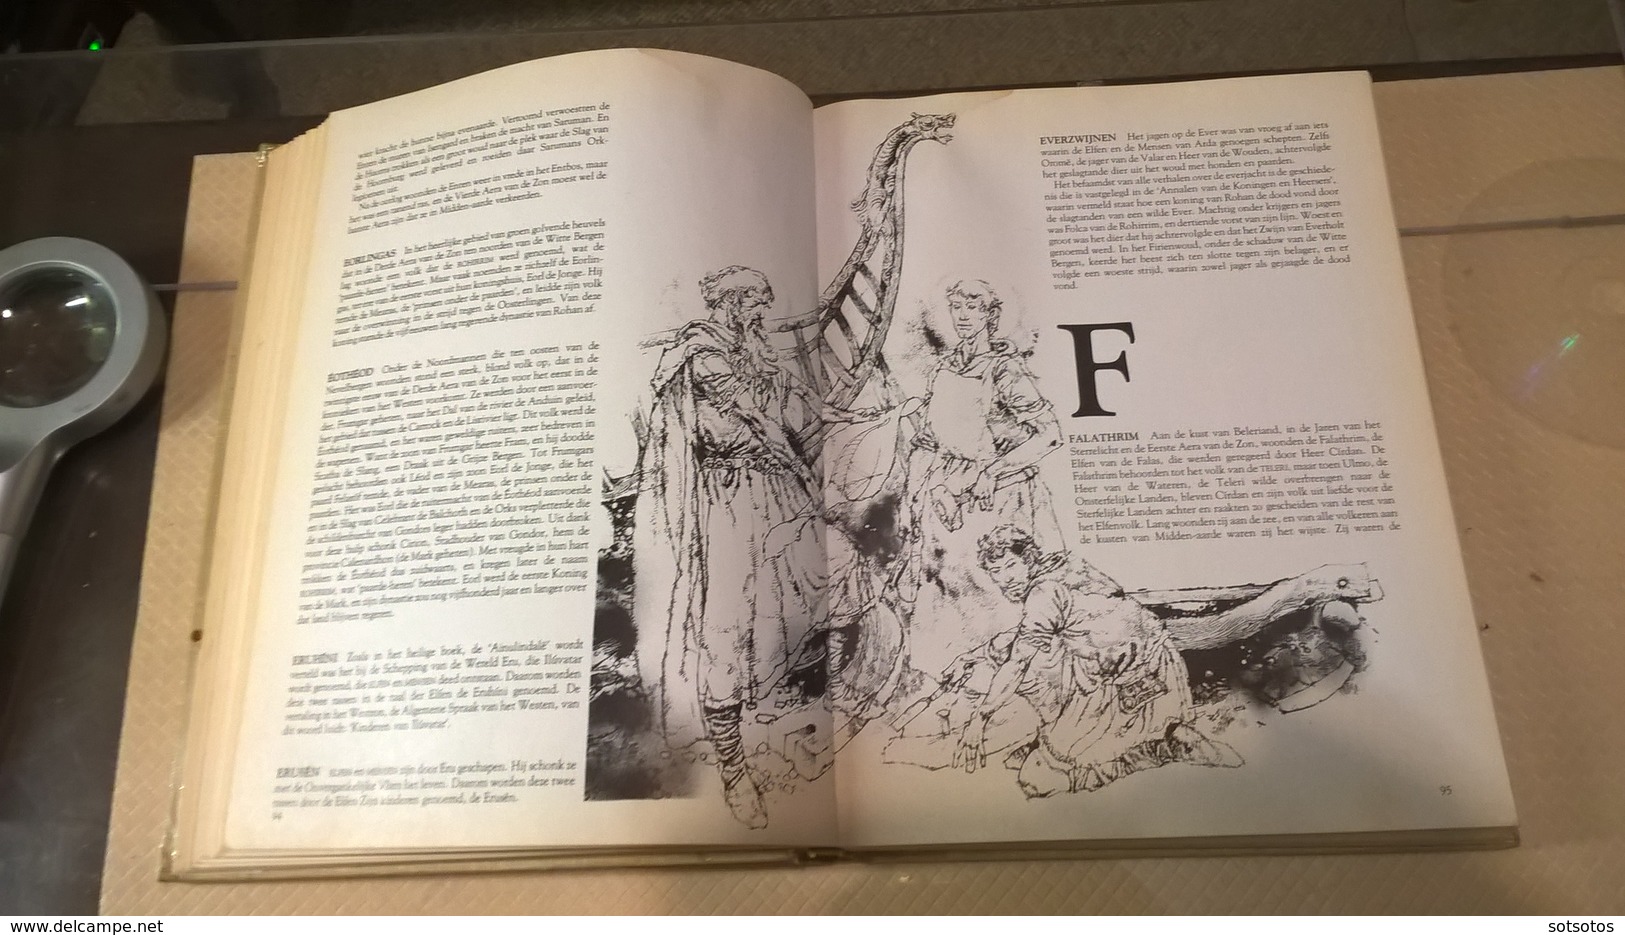 EEN TOLKIEN BESTIARIUM: David DAY – Geillustreerd naslagwerk – 288 pgs (22x28 cent) - Illustrated reference work